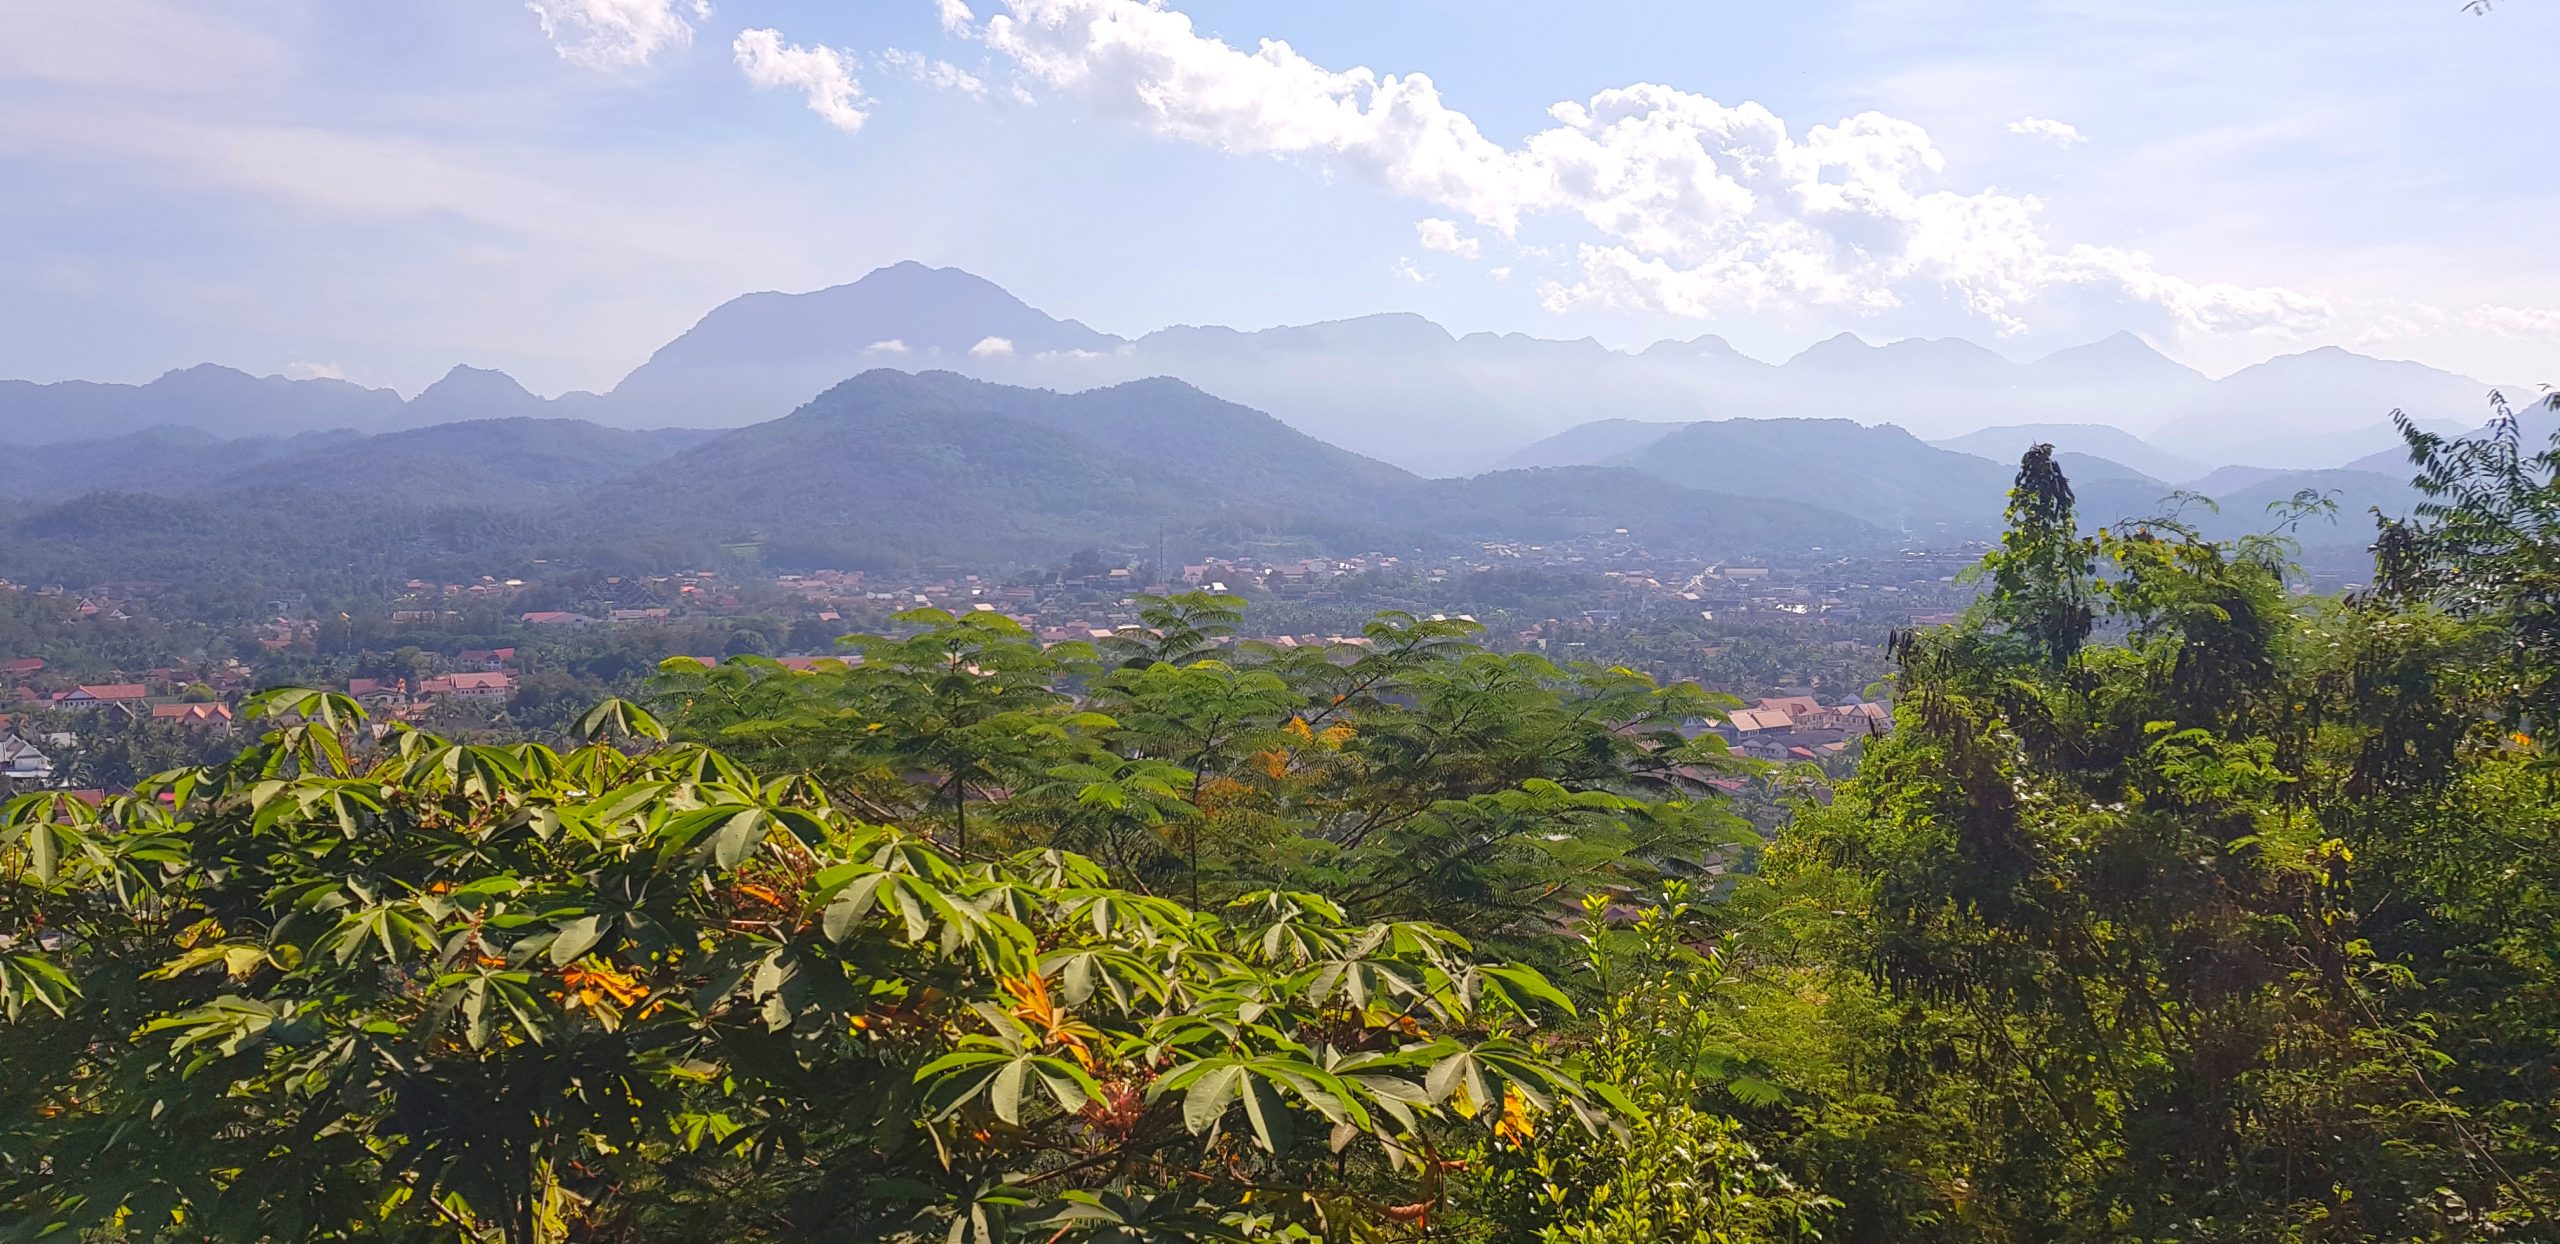 View from Mt Phousi, Luang Prabang, Laos